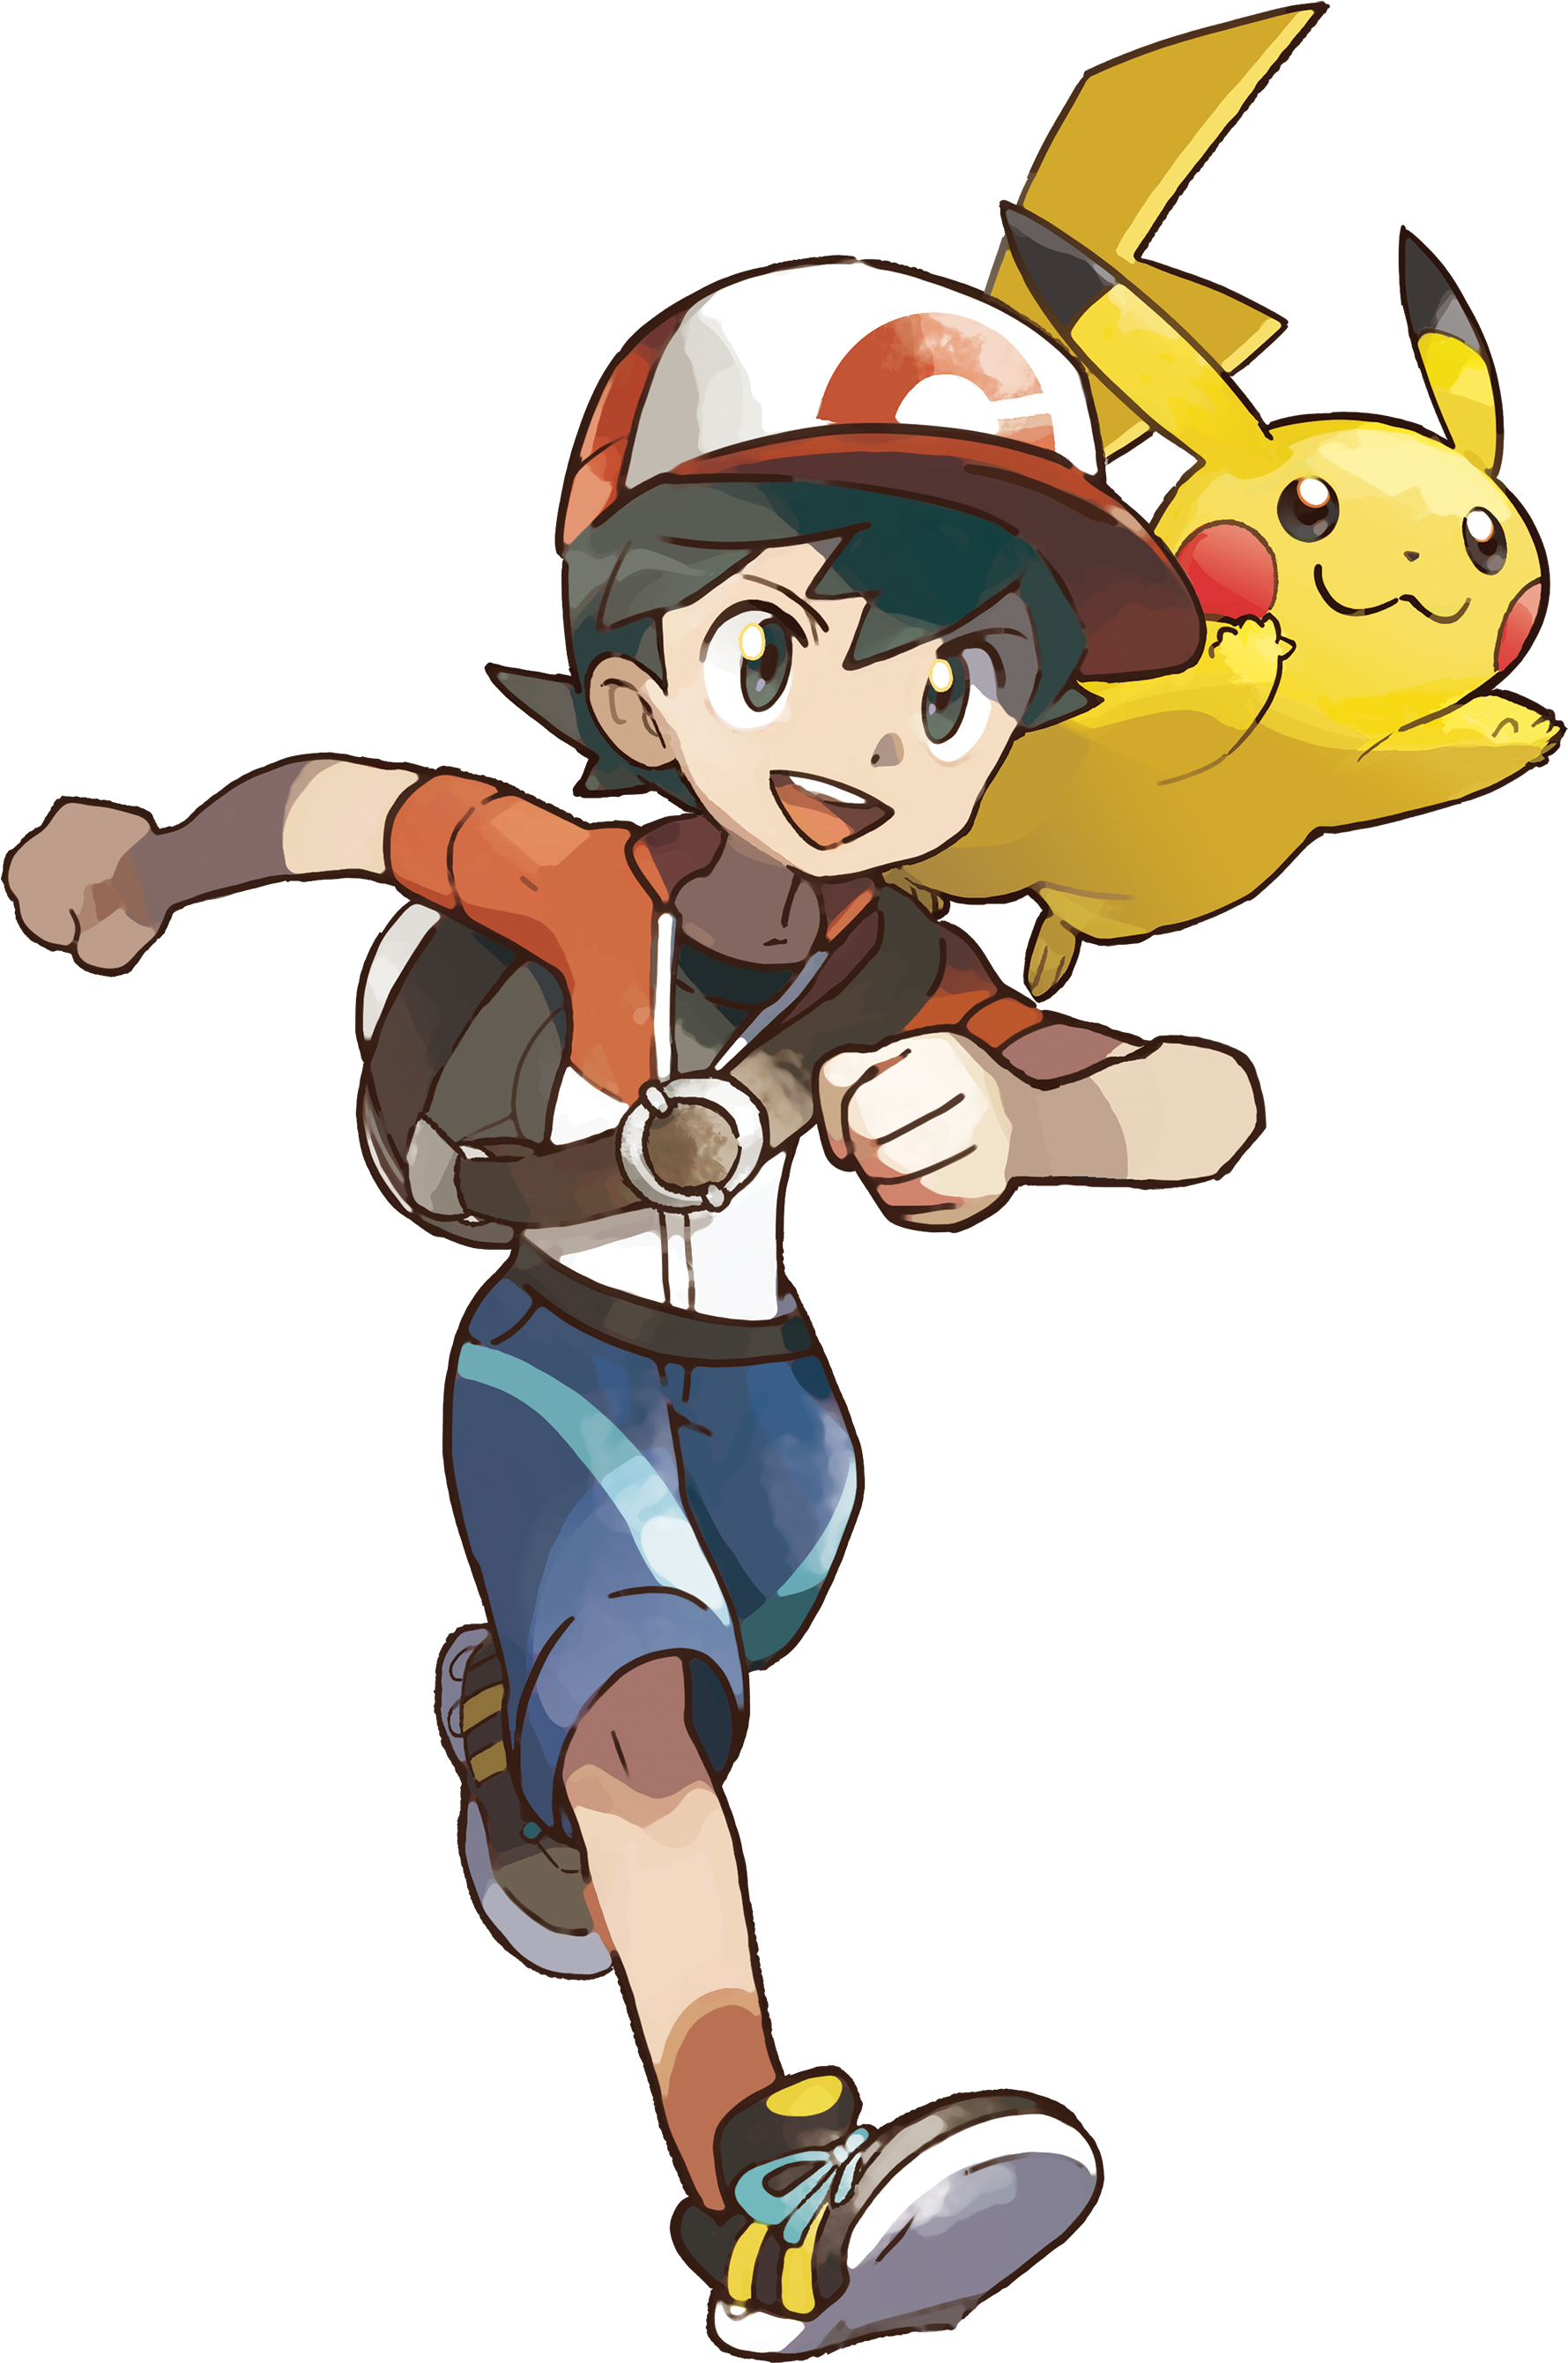 A Cartoon Of A Boy Running With A Yellow Pikachu